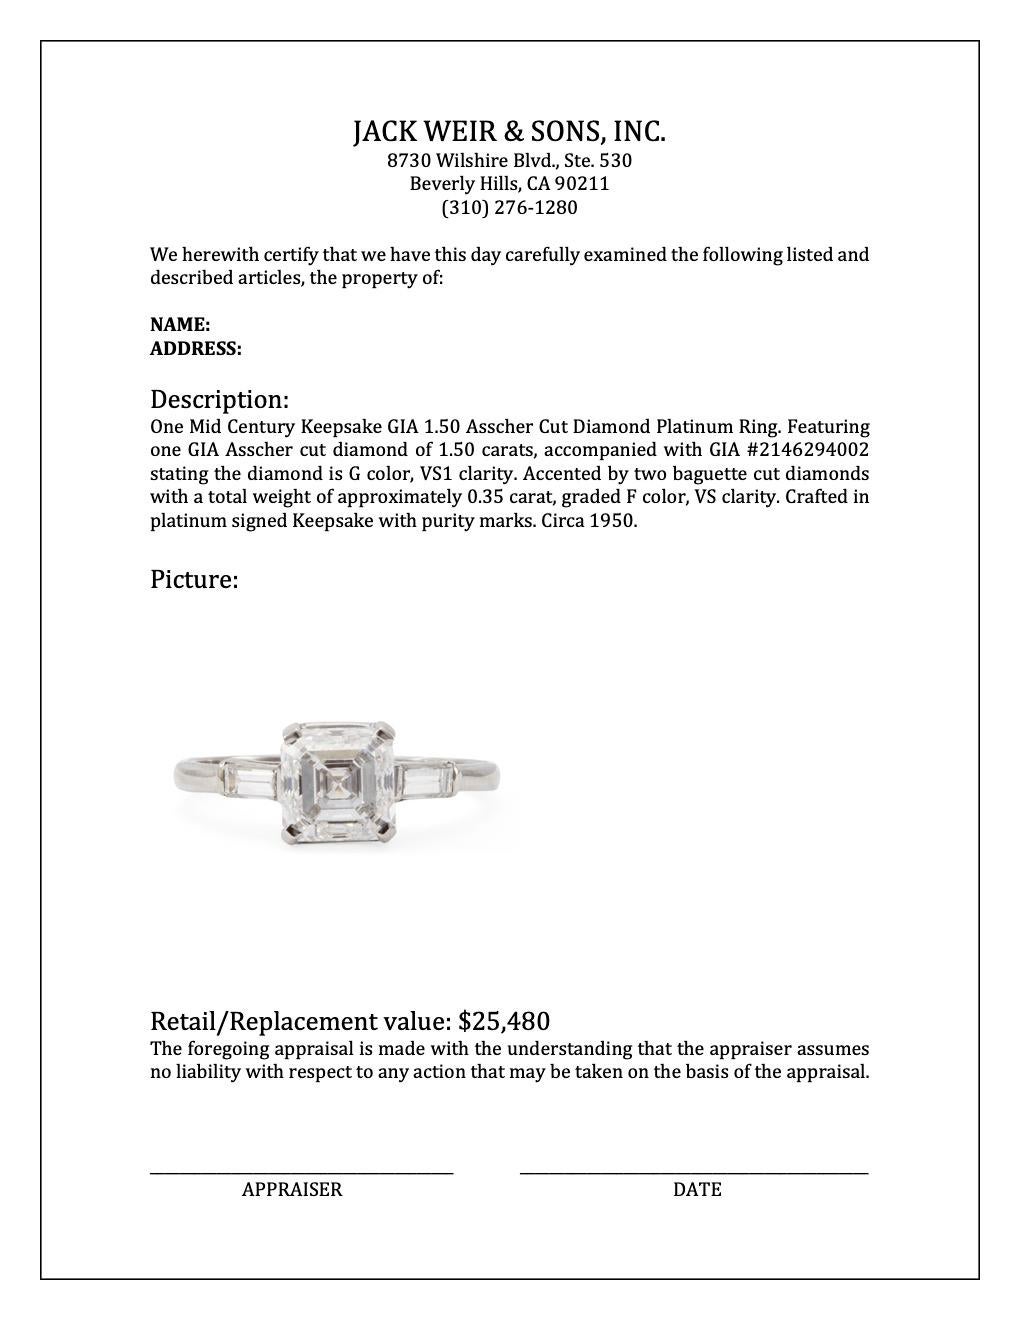 Mid Century Keepsake GIA 1.50 Asscher Cut Diamond Platinum Ring 2